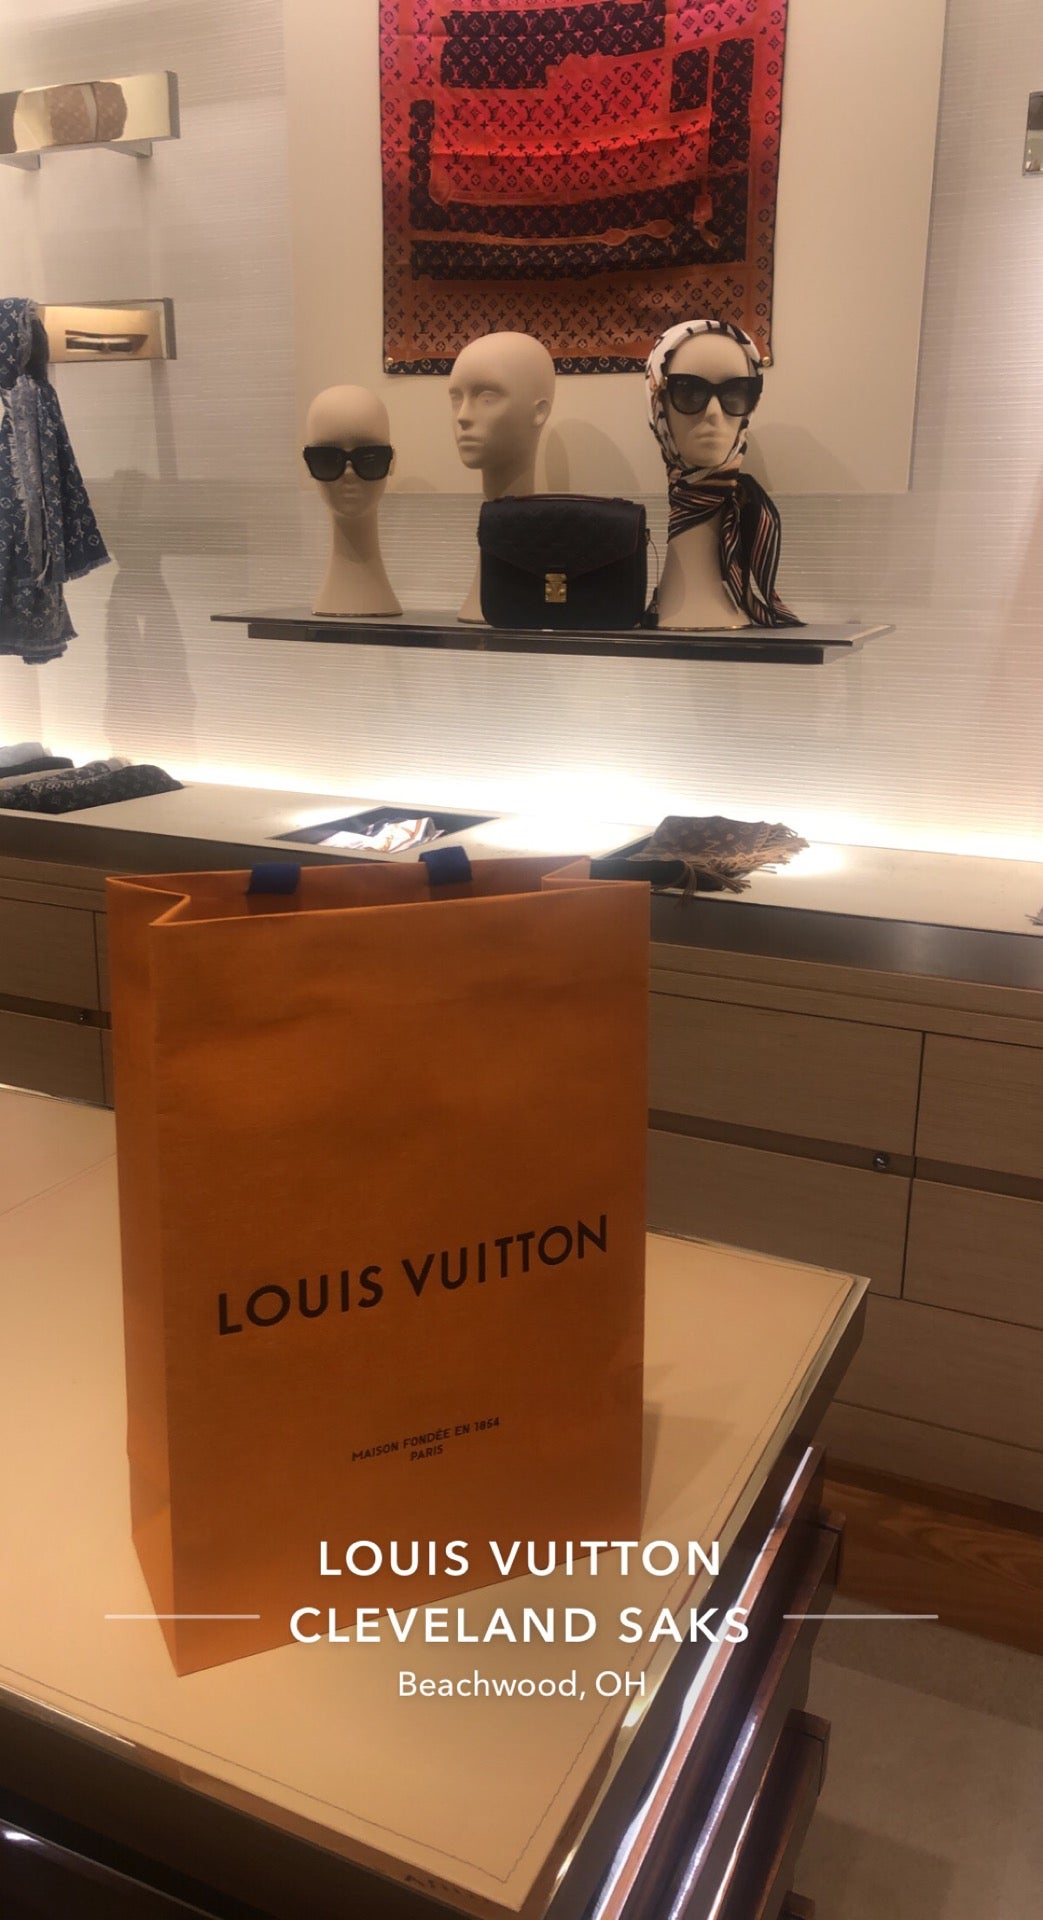 Louis Vuitton Cleveland Saks store, United States